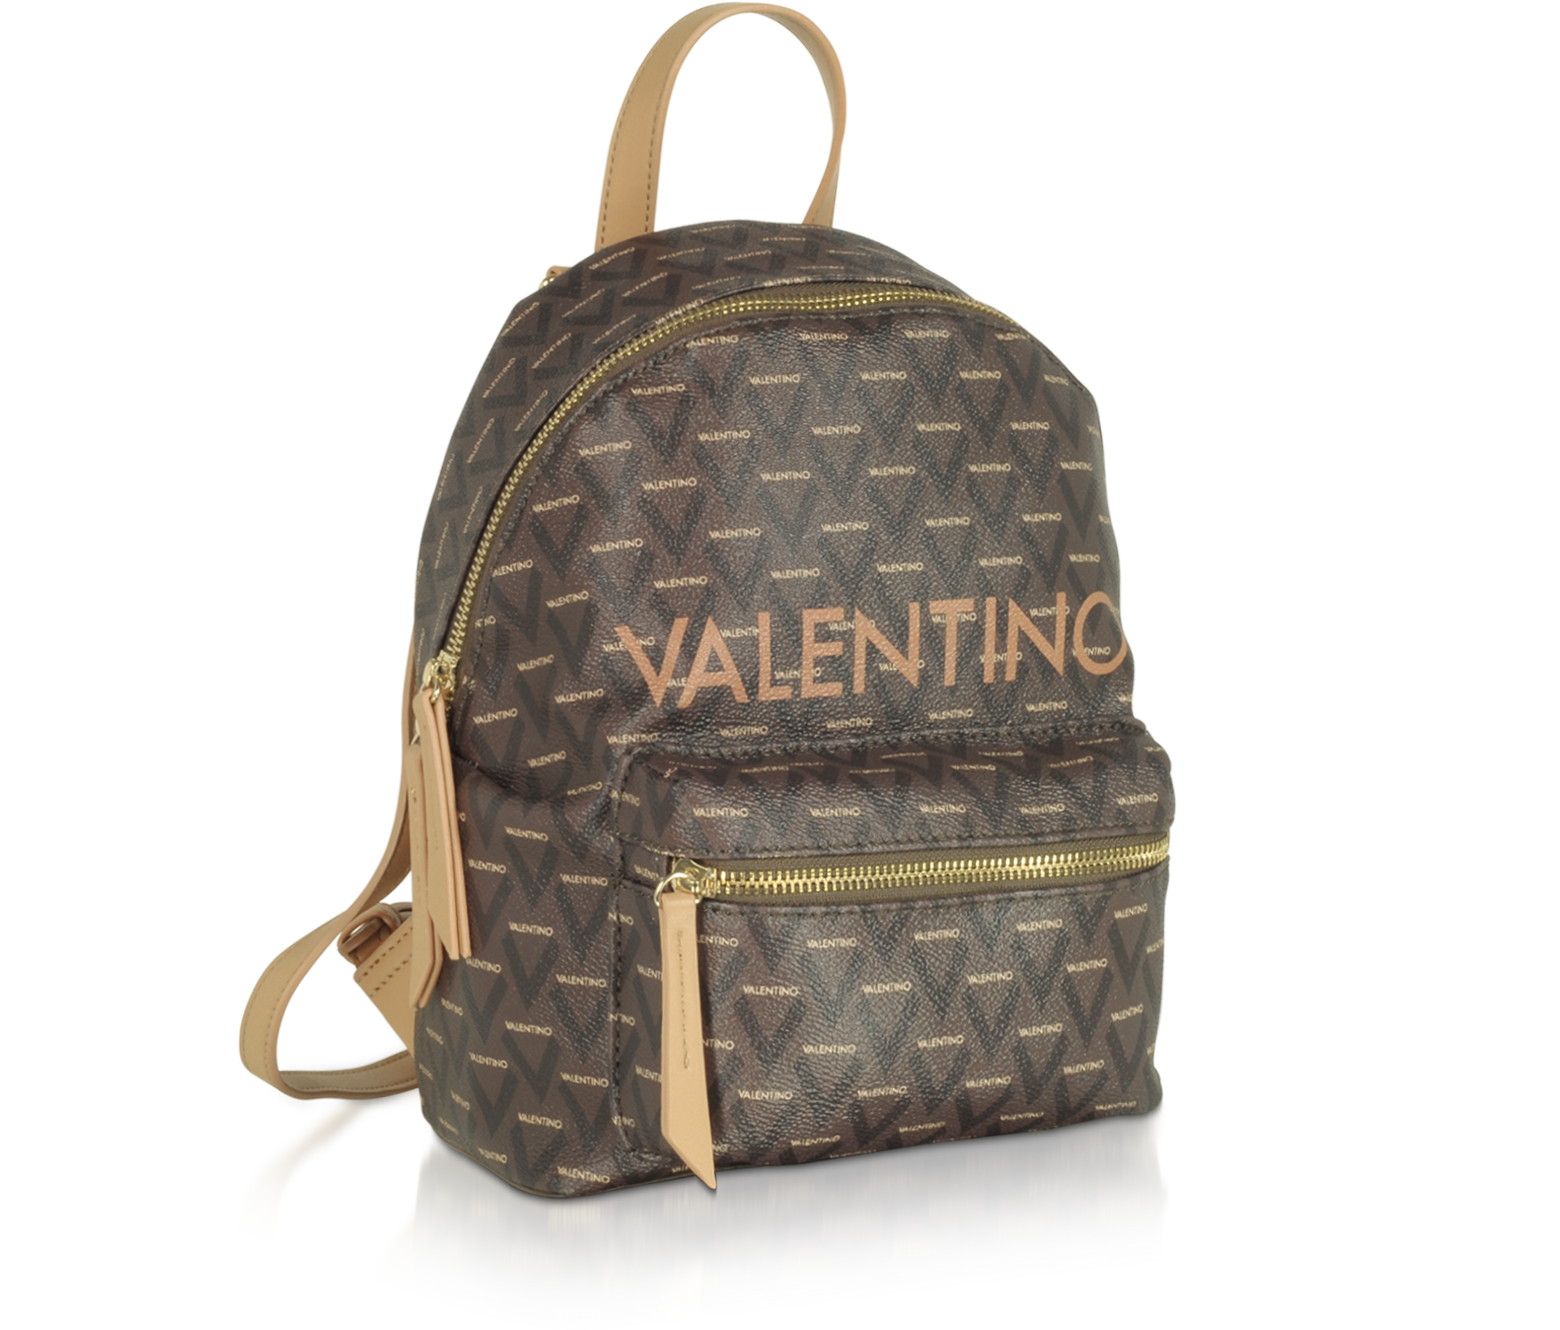 mario valentino backpack